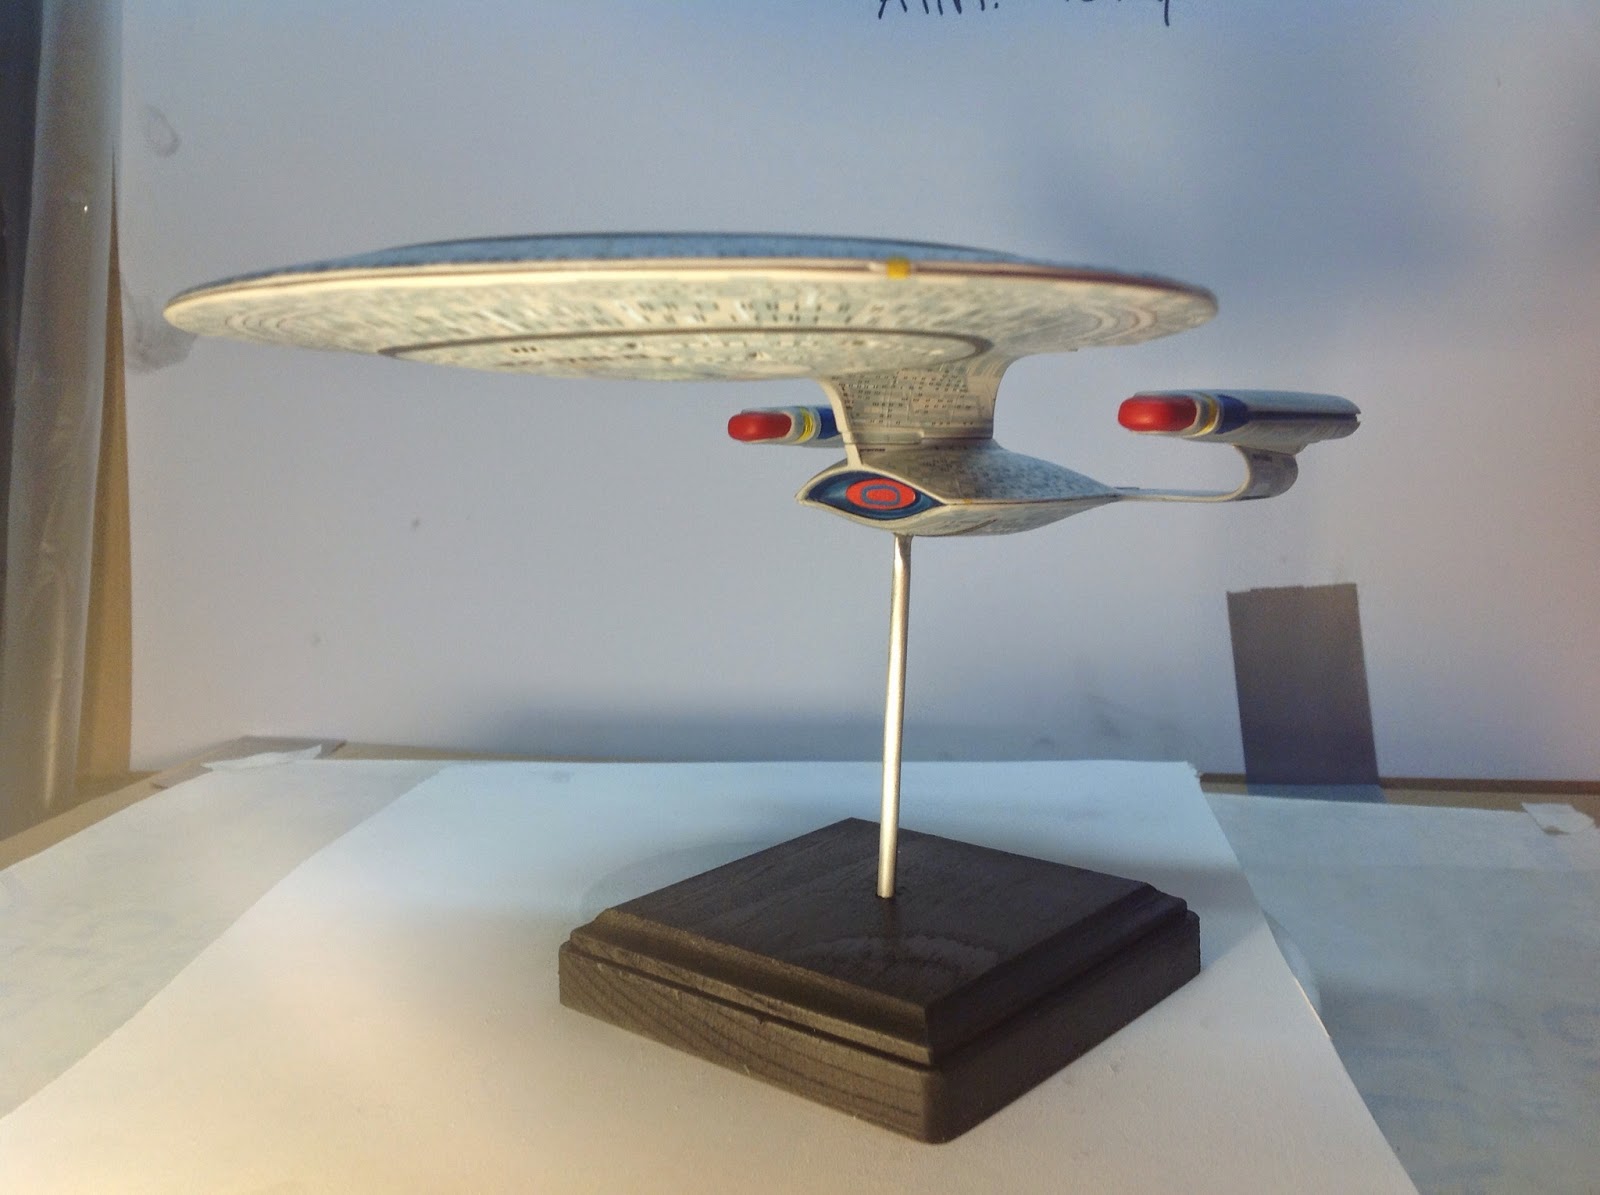 Star Trek Scale Model